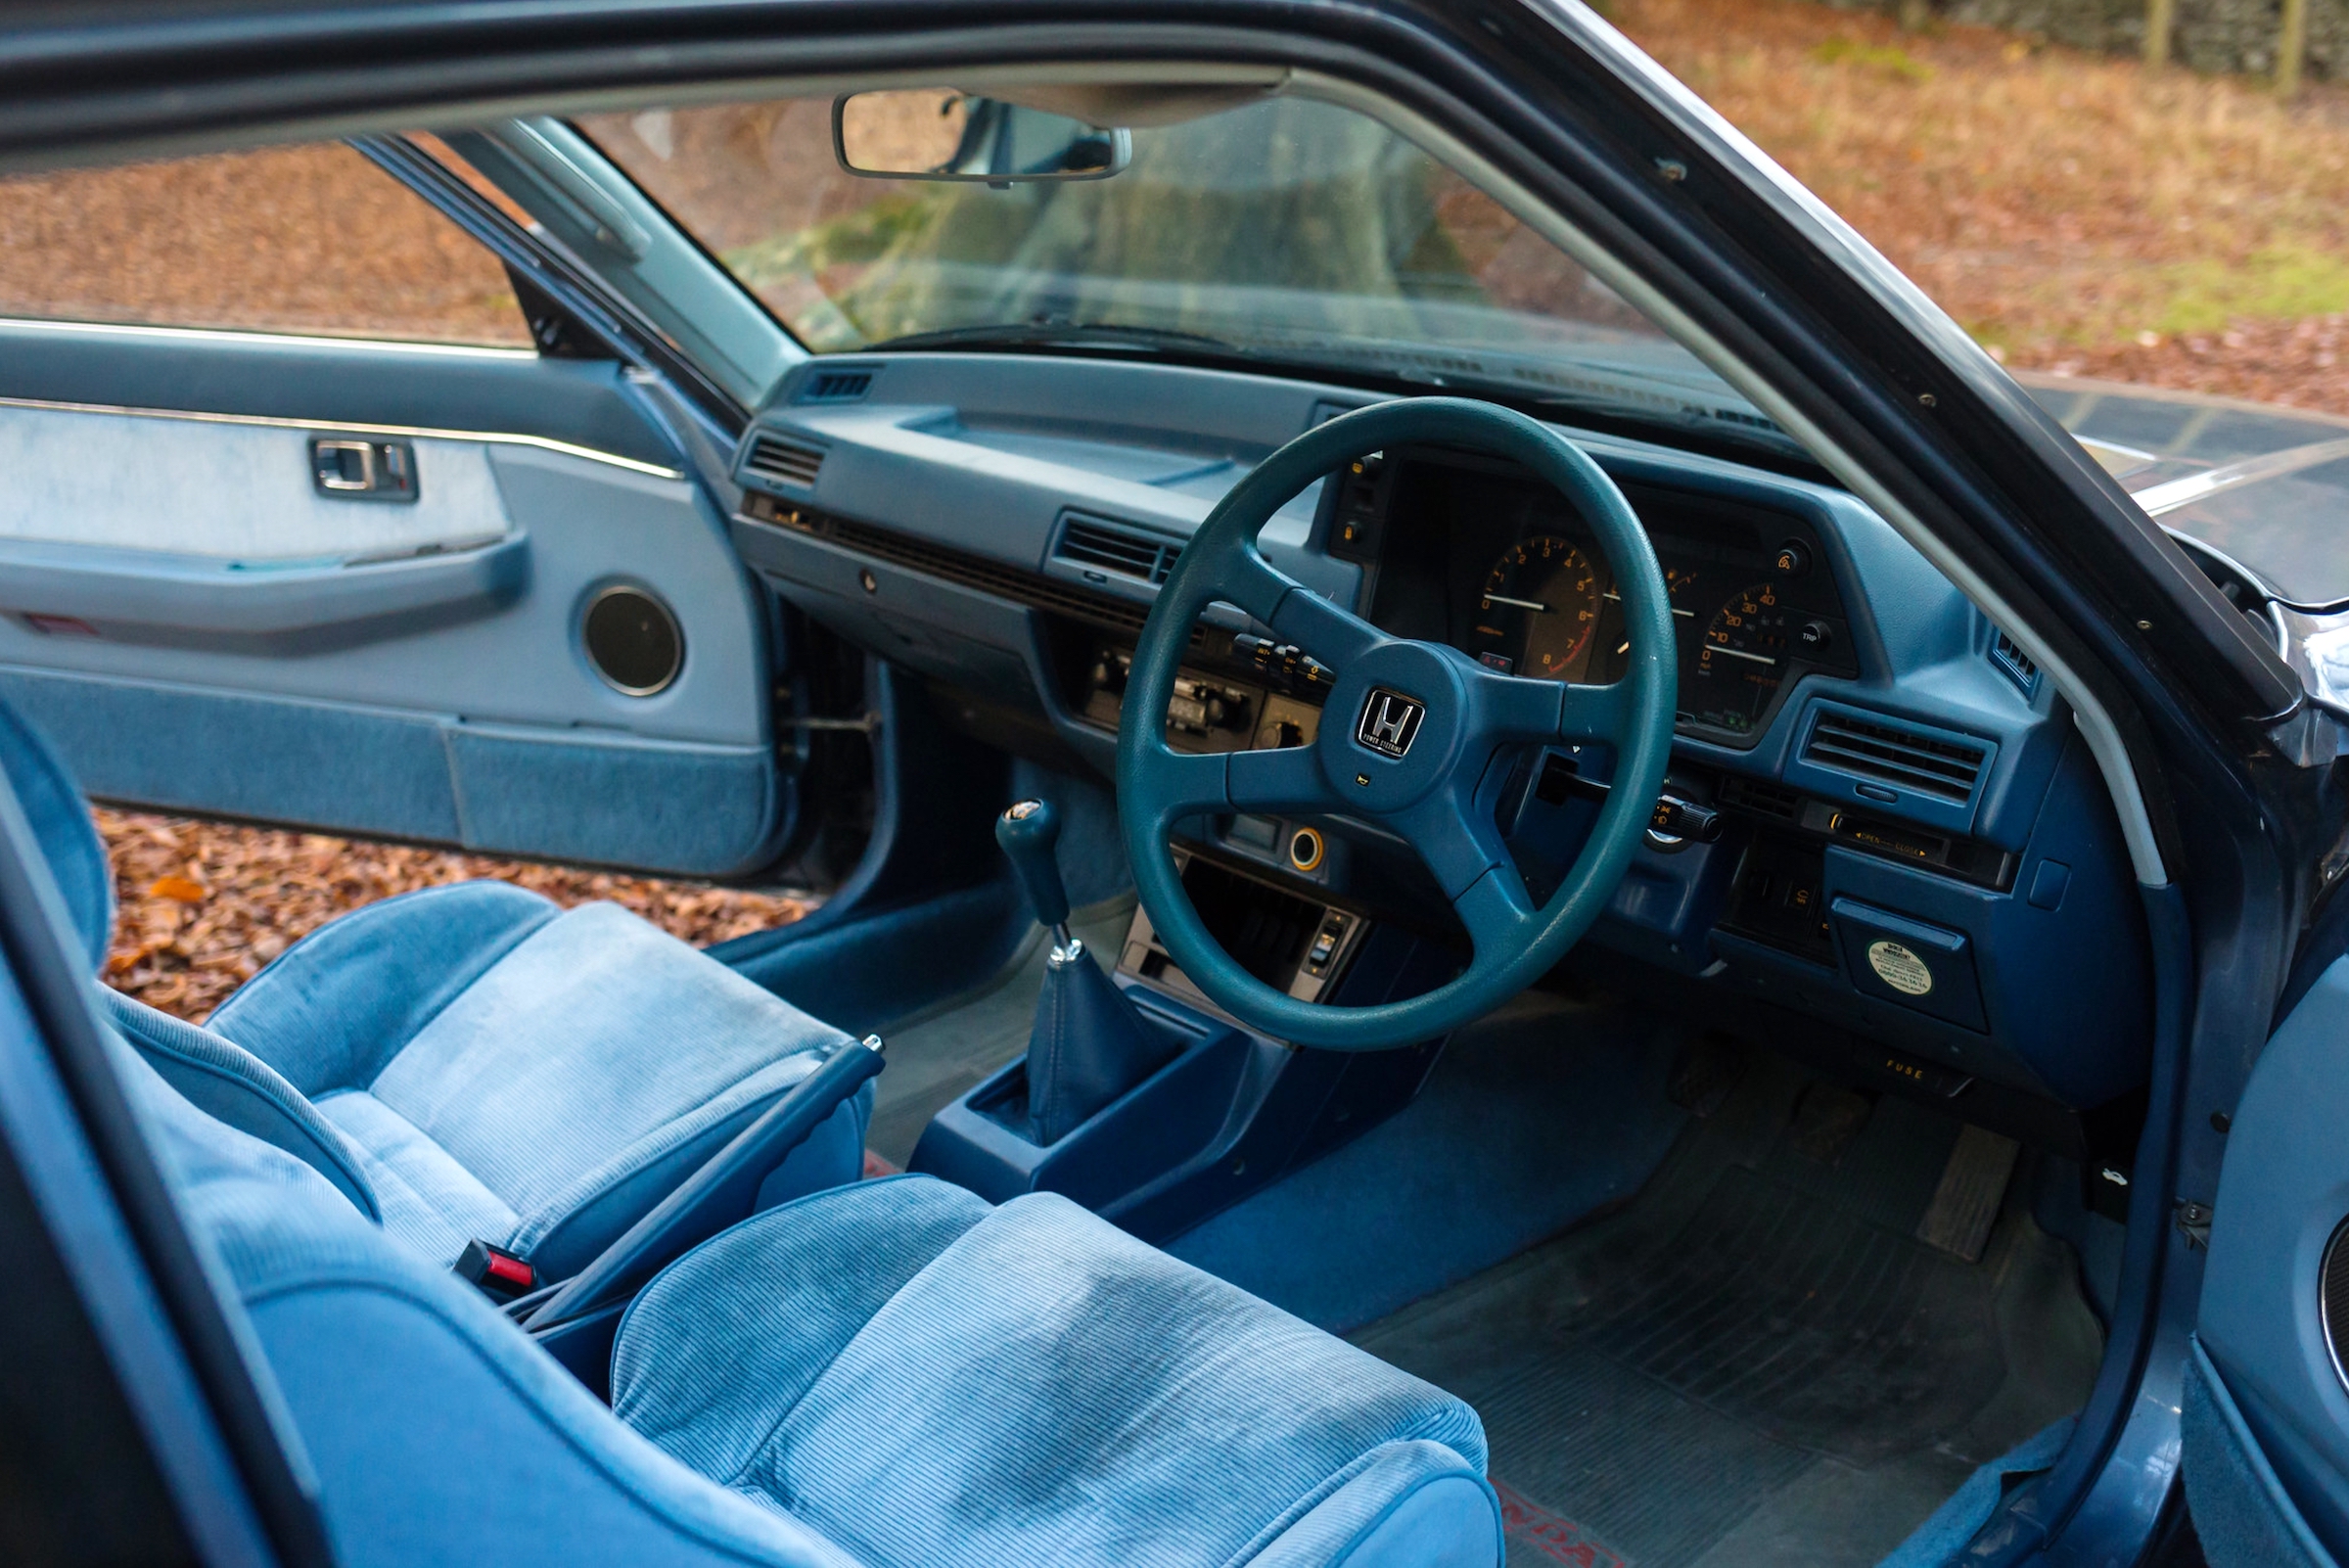 1984 Honda Accord interior